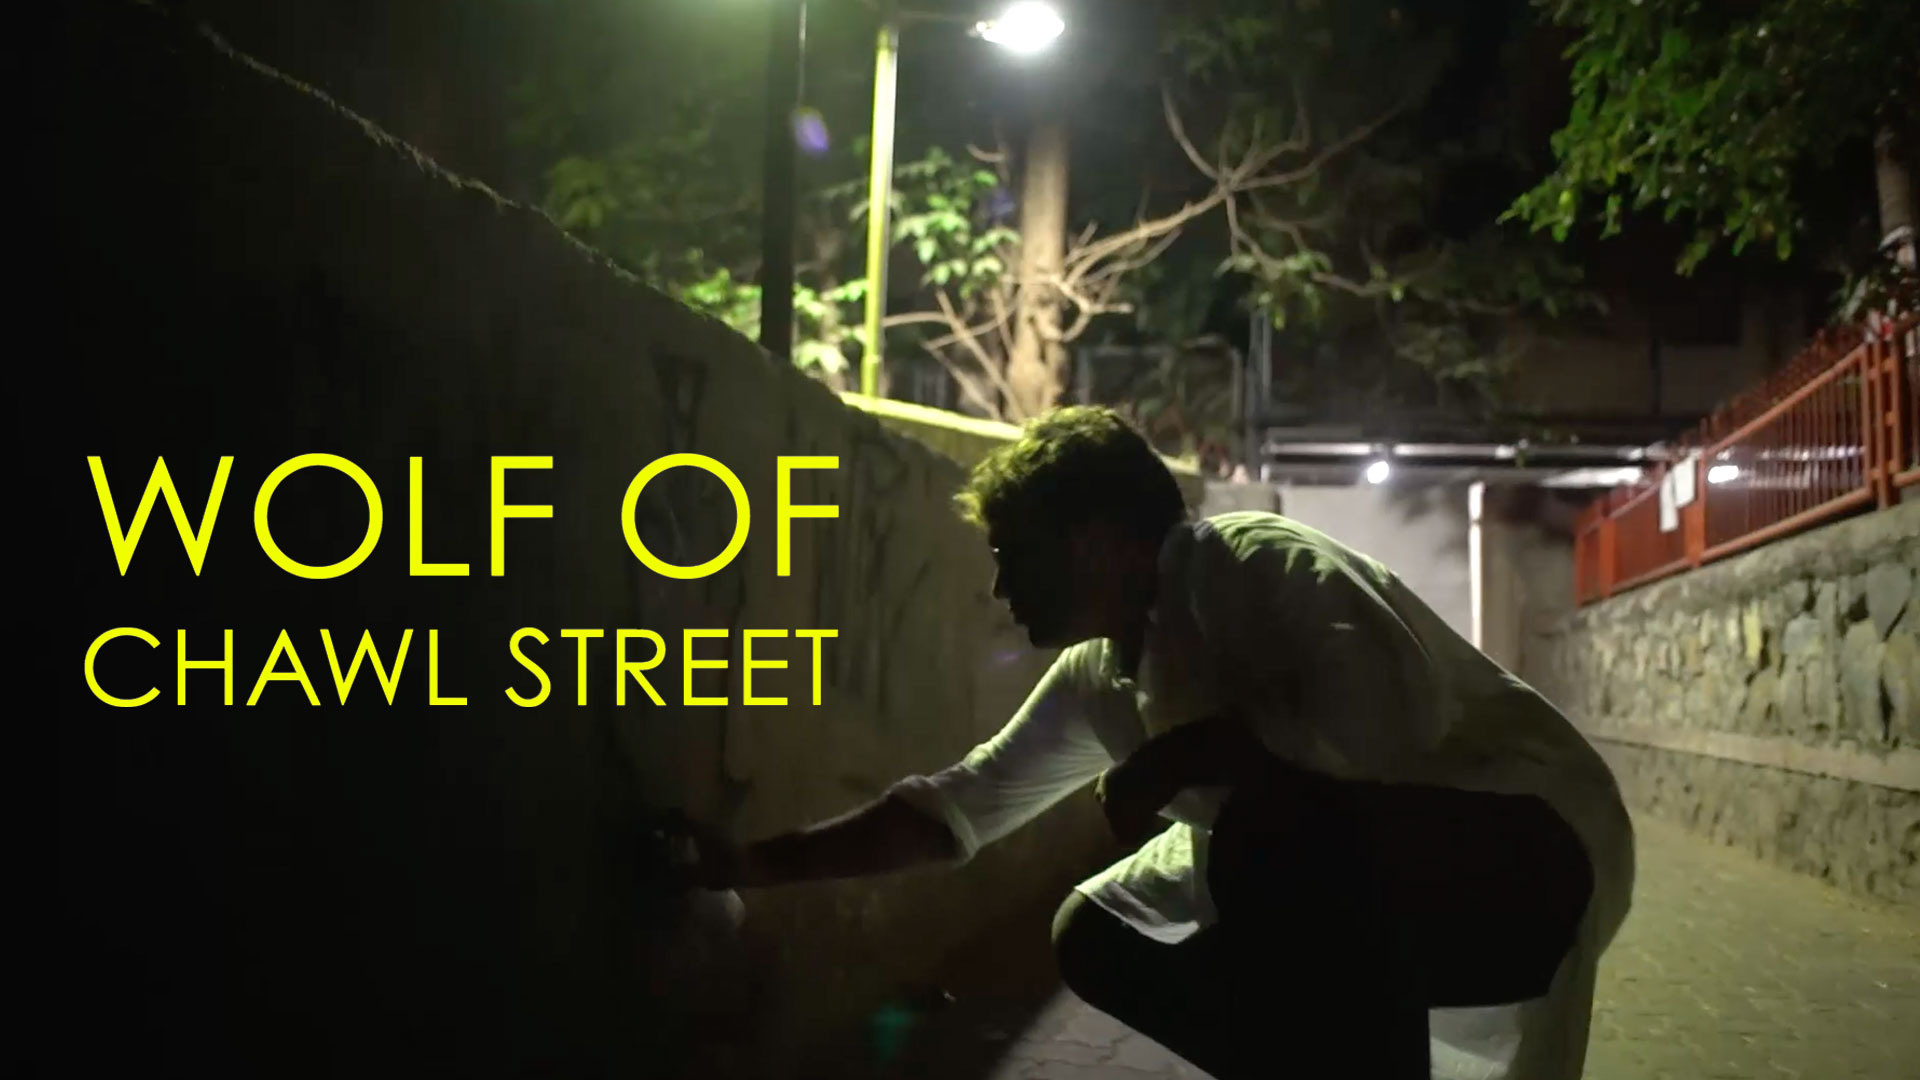 WOLF OF CHAWL STREET